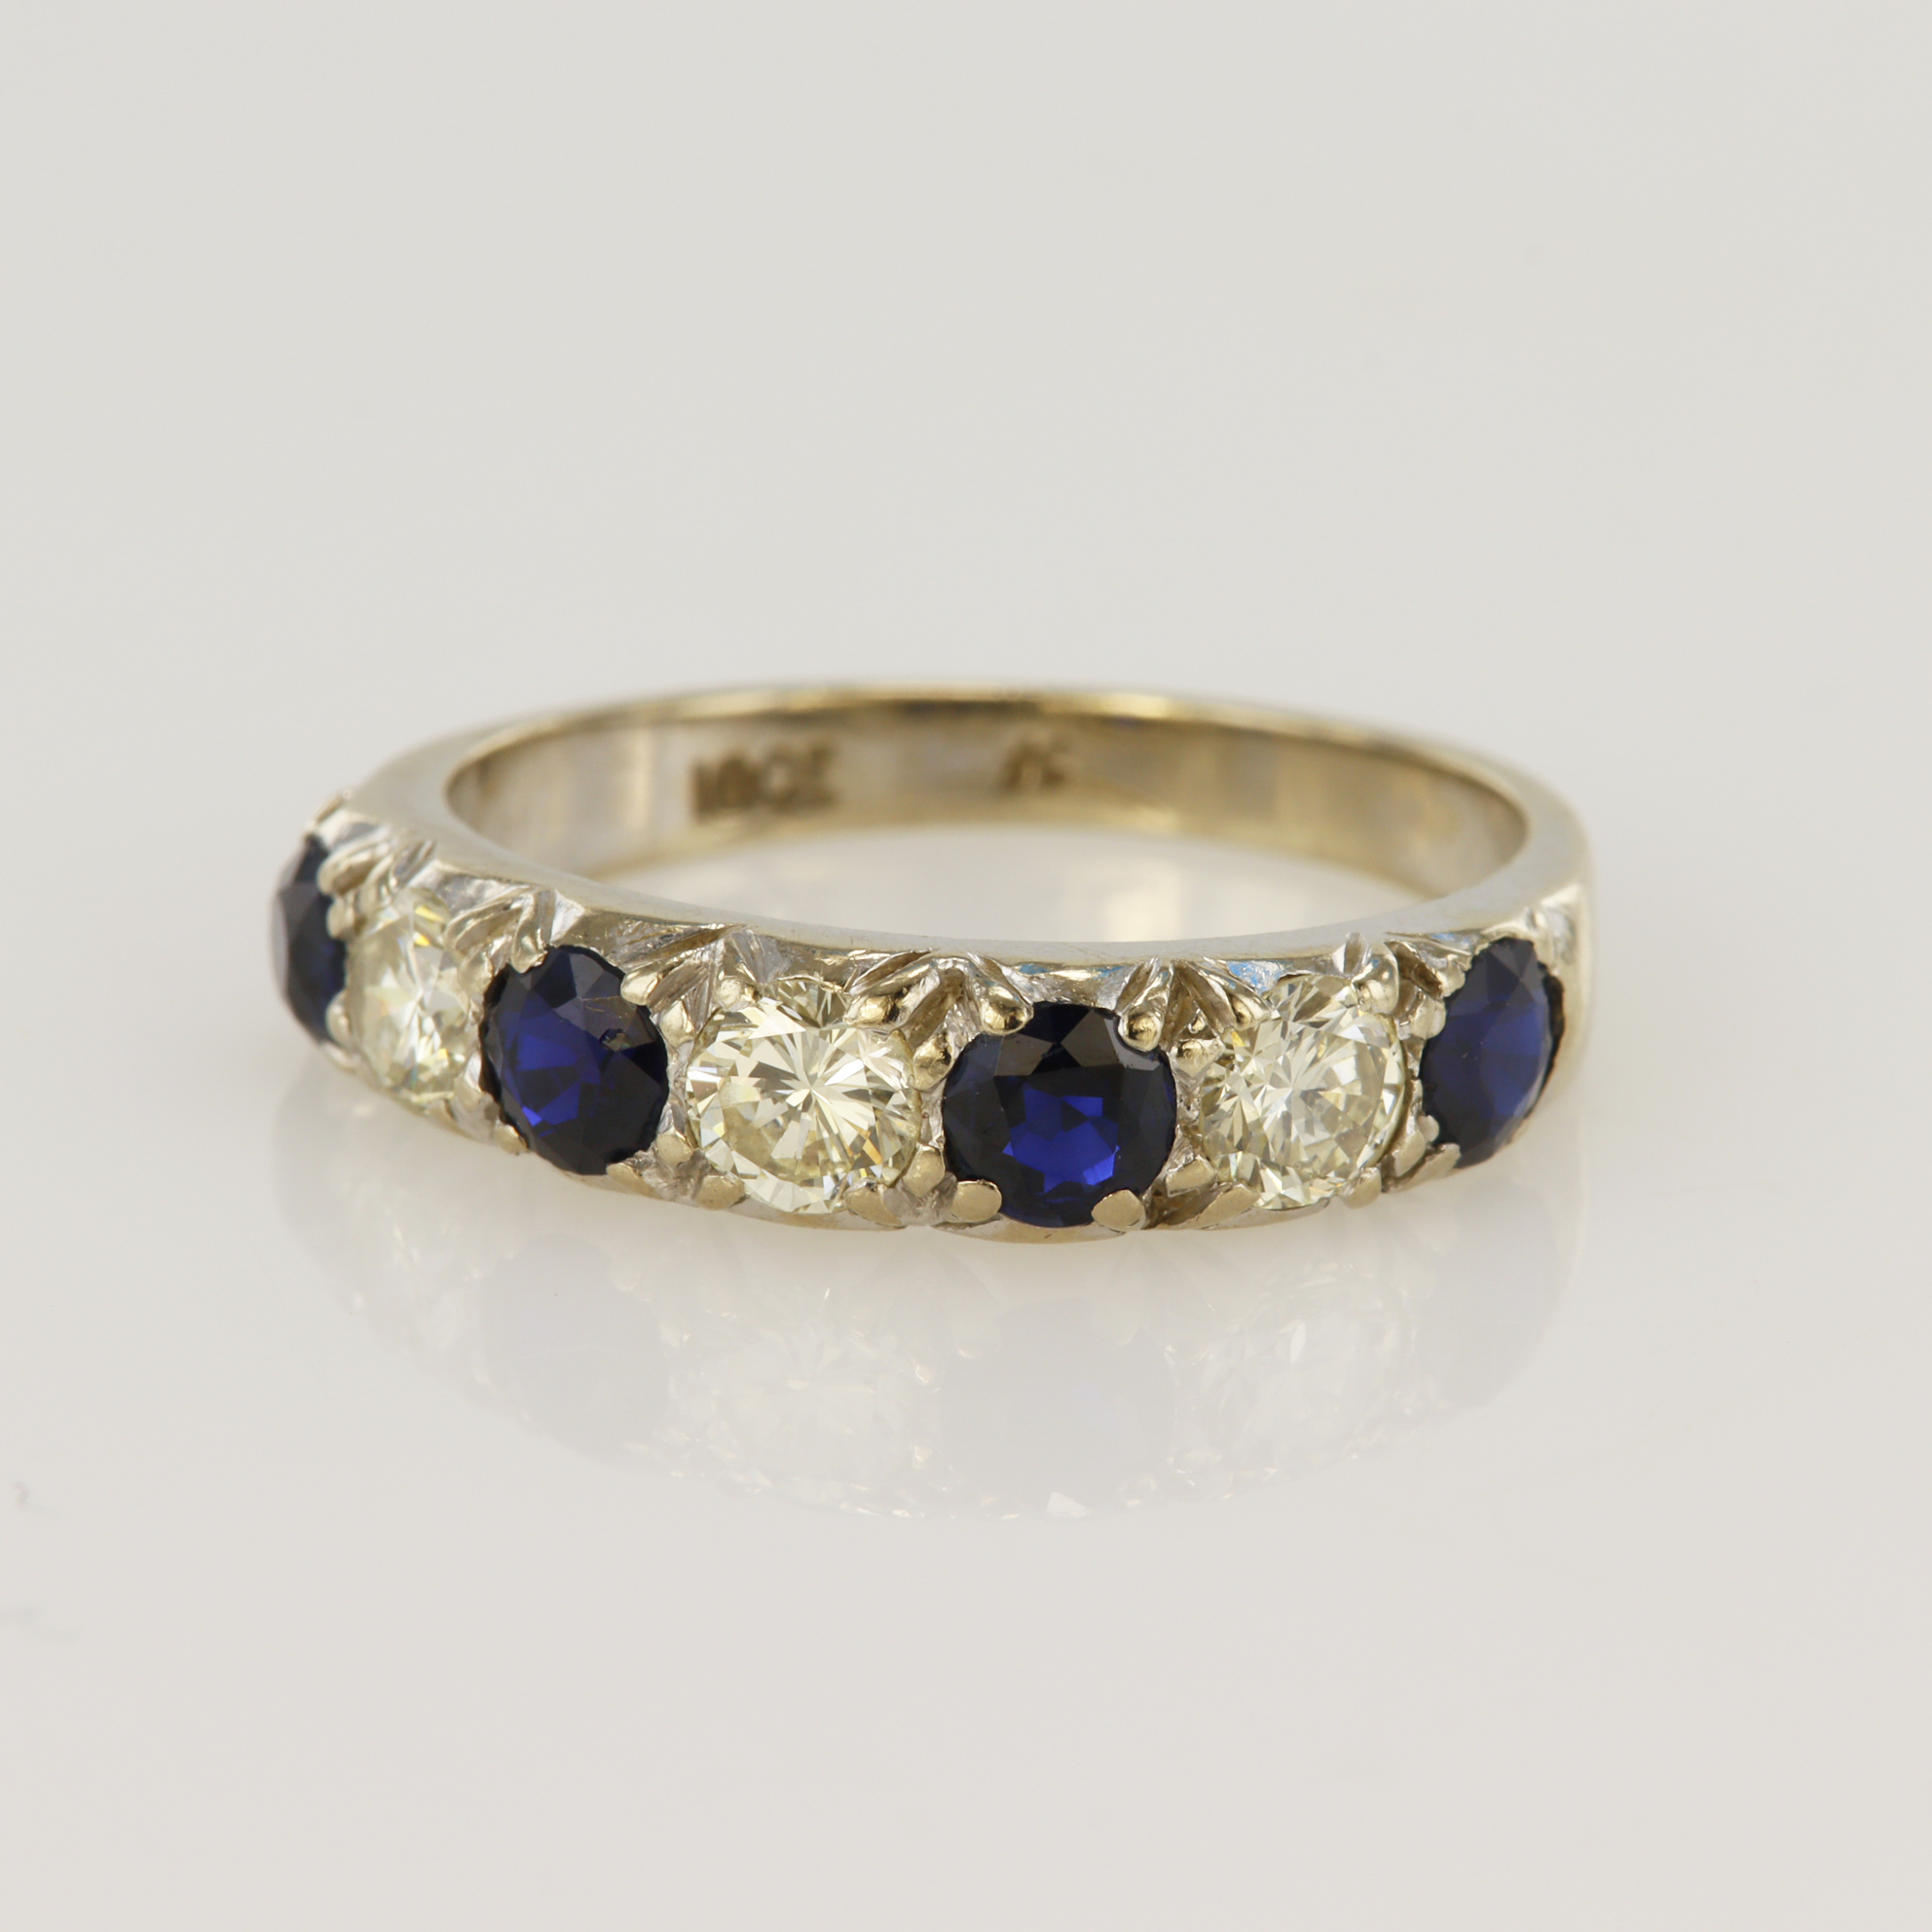 White gold (tests 18ct) diamond and sapphire half eternity ring, three round brilliant cut